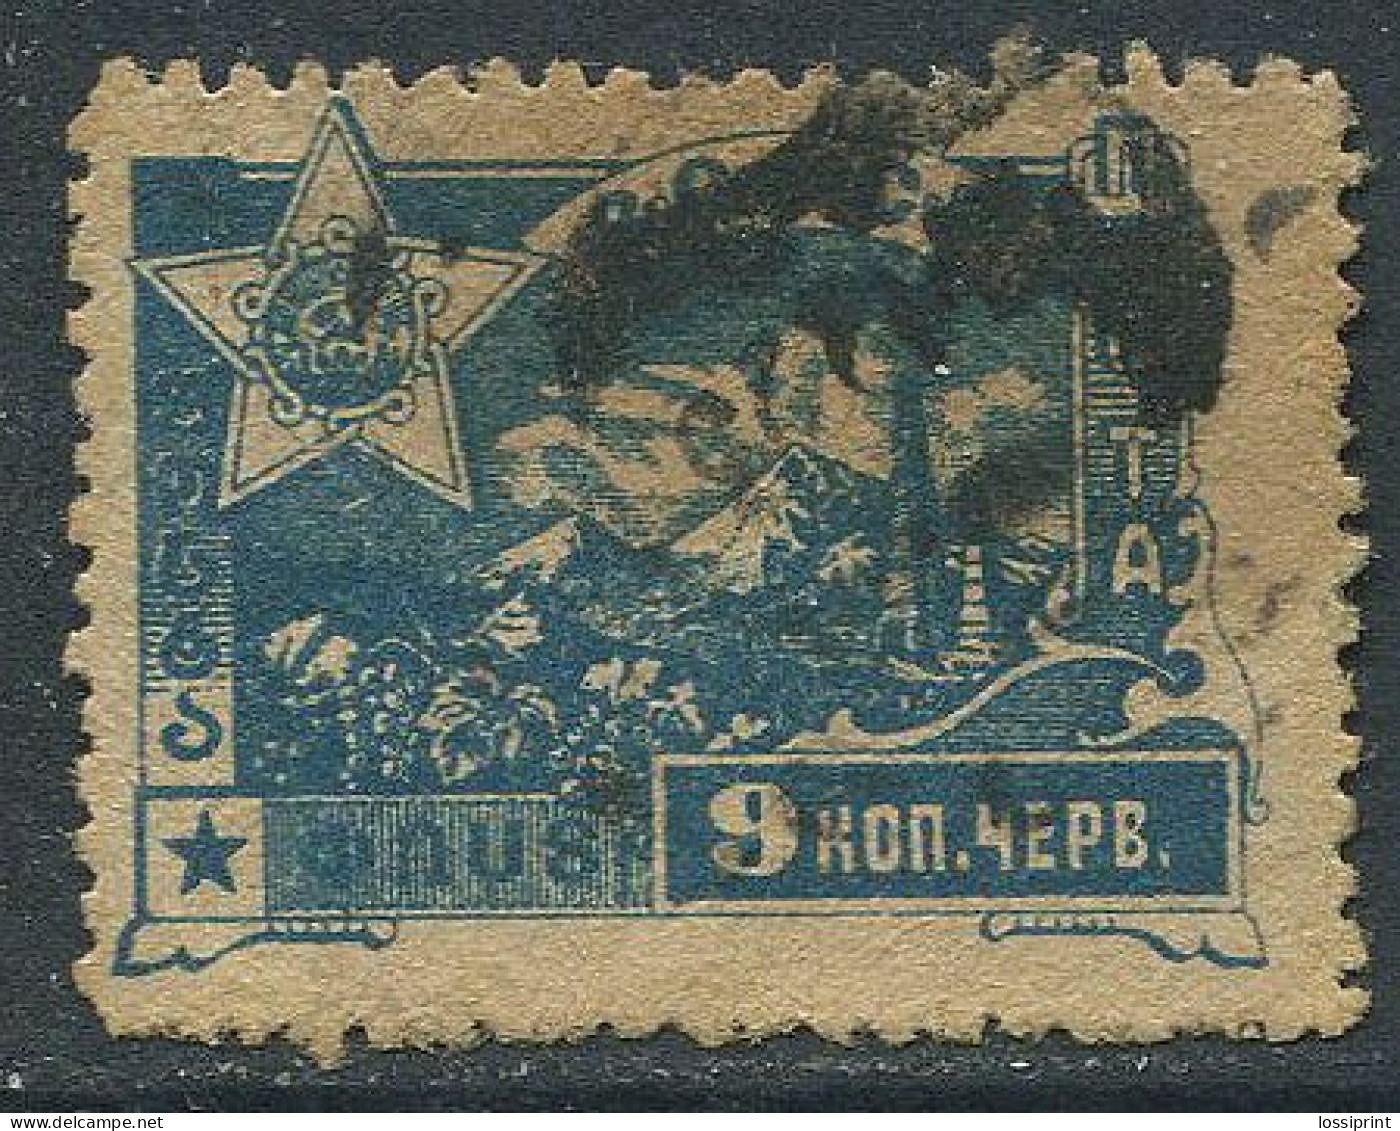 ESFSR:Russia:Used Stamp 9 Kop, 1923 - Russ. Sozialistische Föderative Sowjetrepublik (RSFSR)